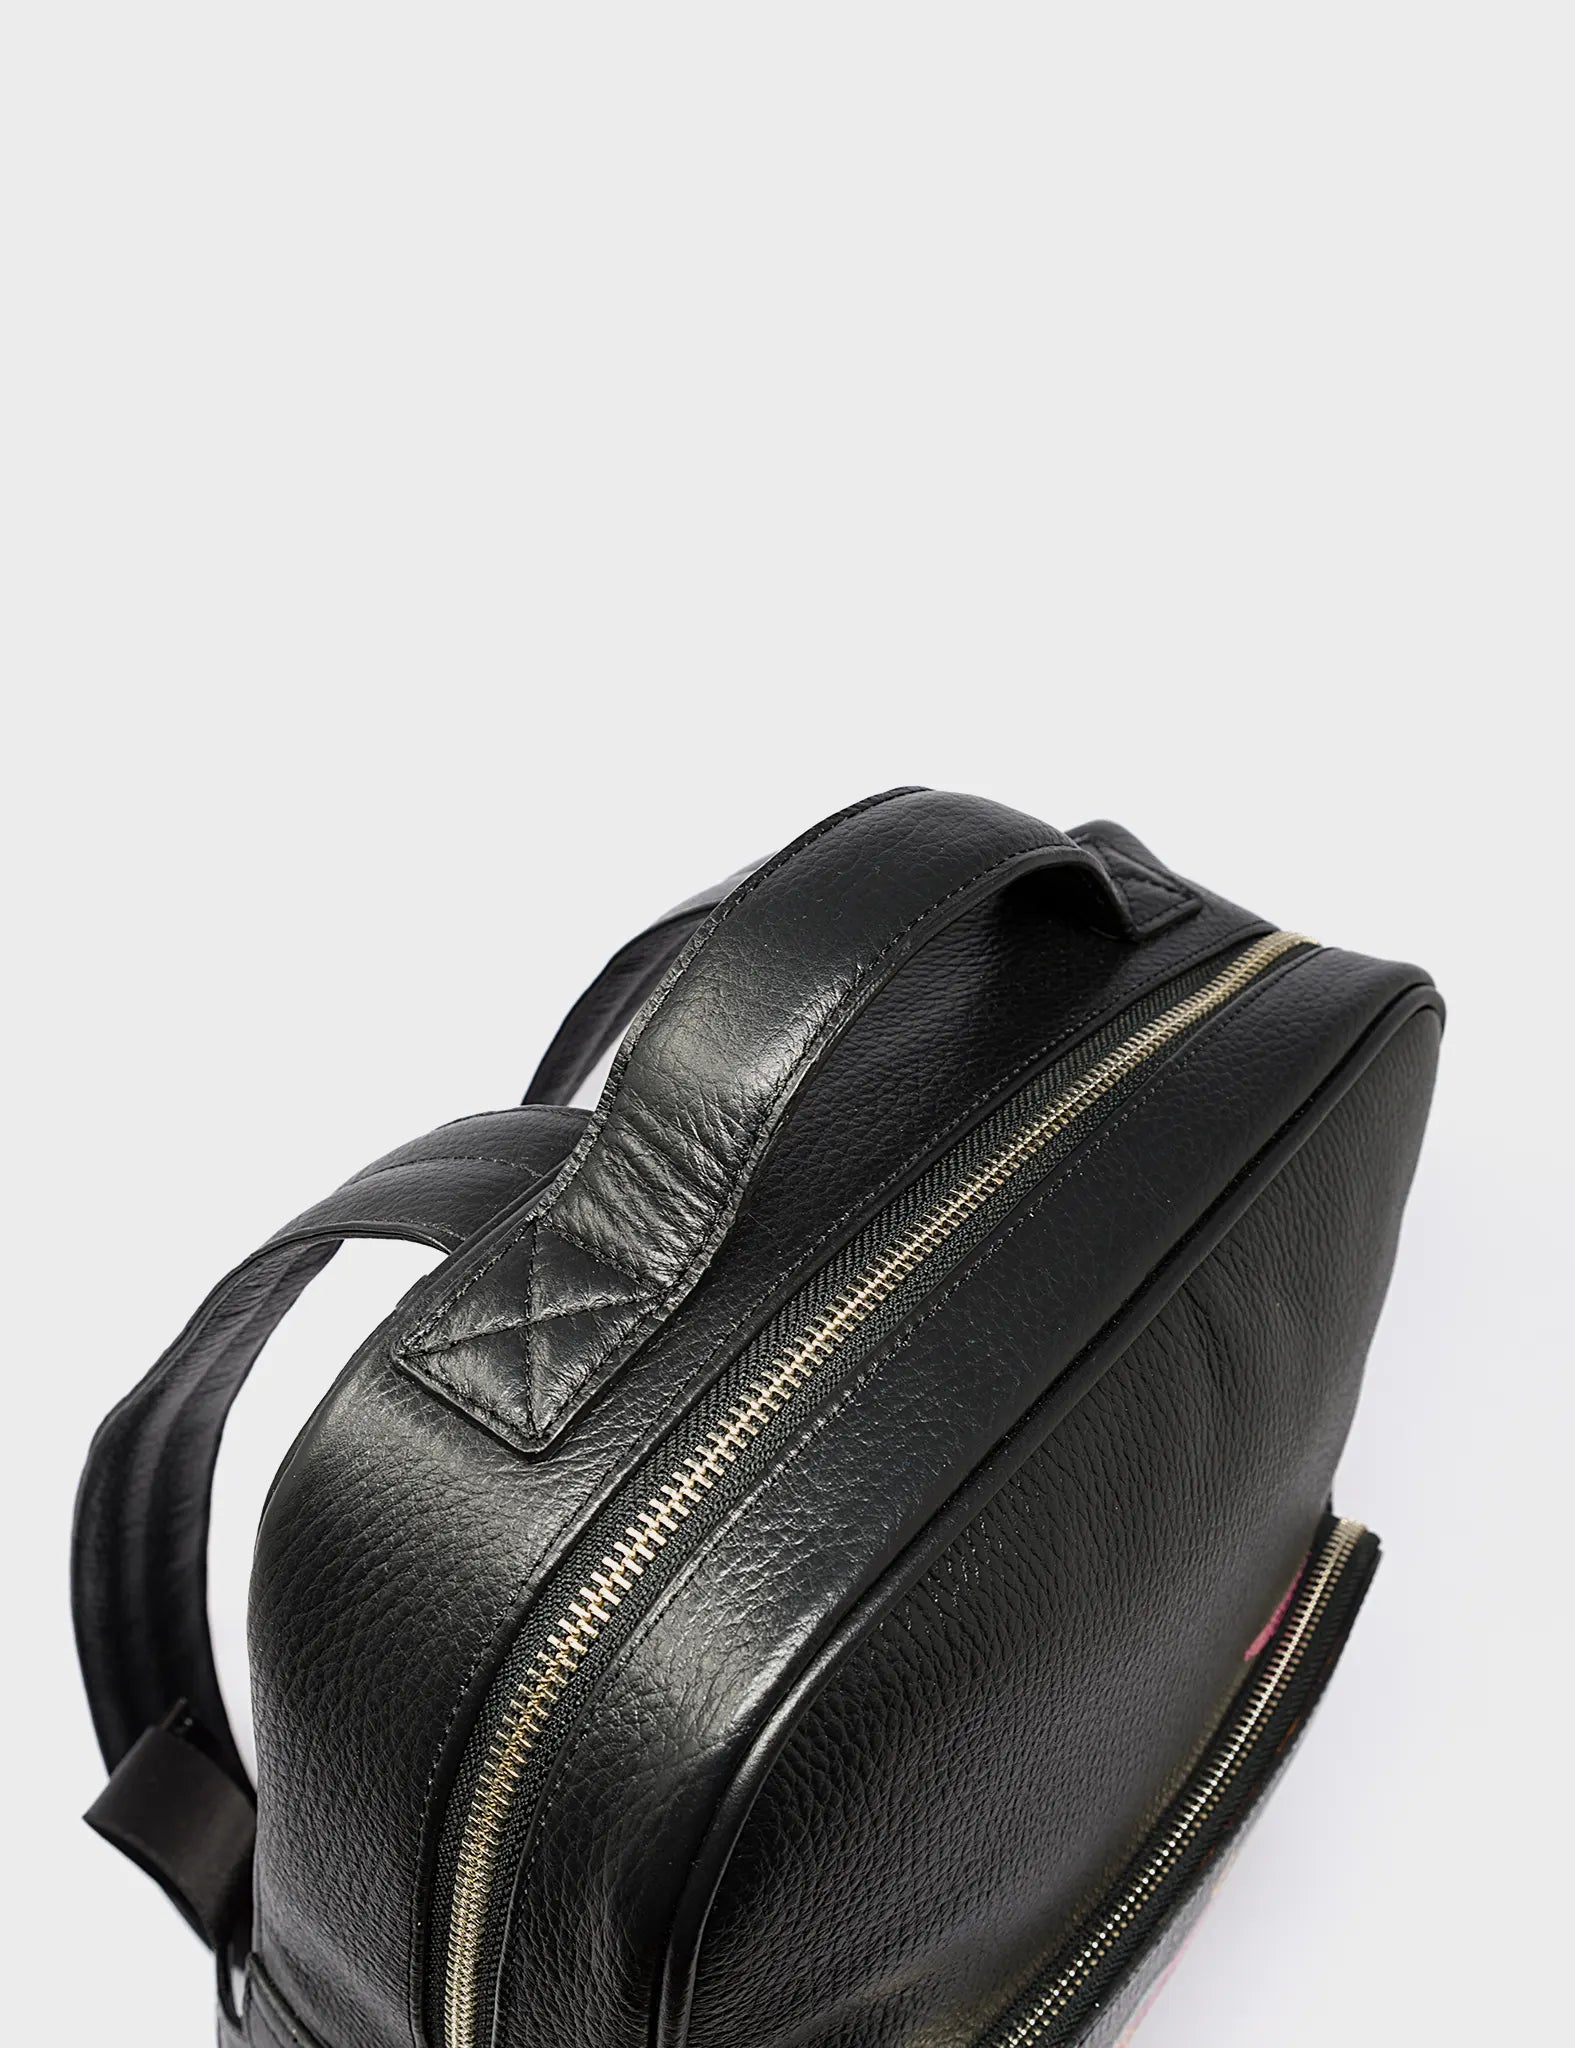 Black Leather Backpack Medium - Tiger and Snake Print - Top handle